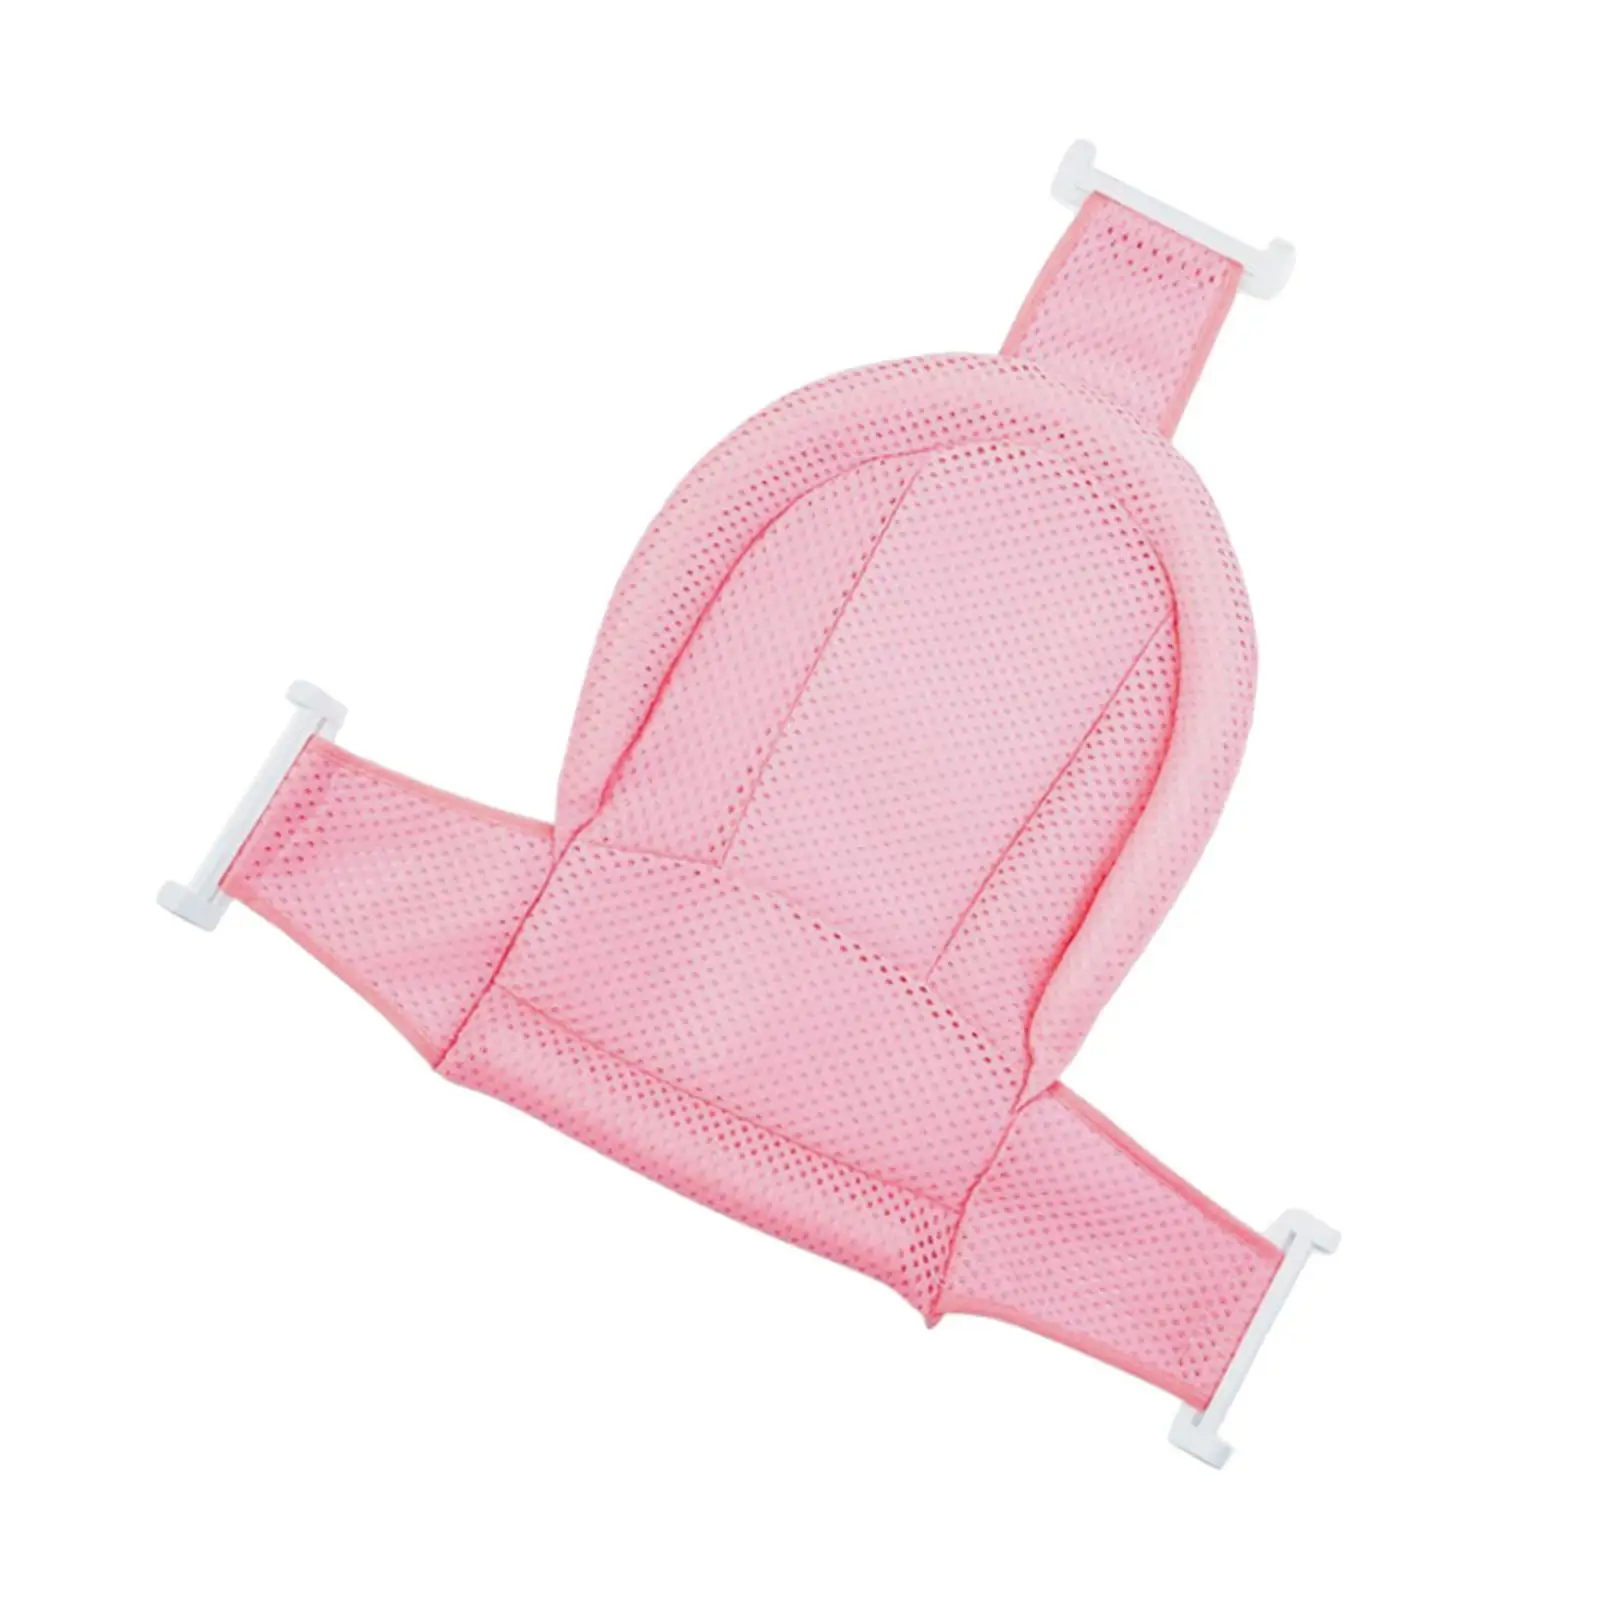 Baby Bath Seat Support Net Floating Bathing Tub Seat Nonslip Adjustable Baby Bath Cushion Pad for Newborn Boy Girl 0-36M Infant